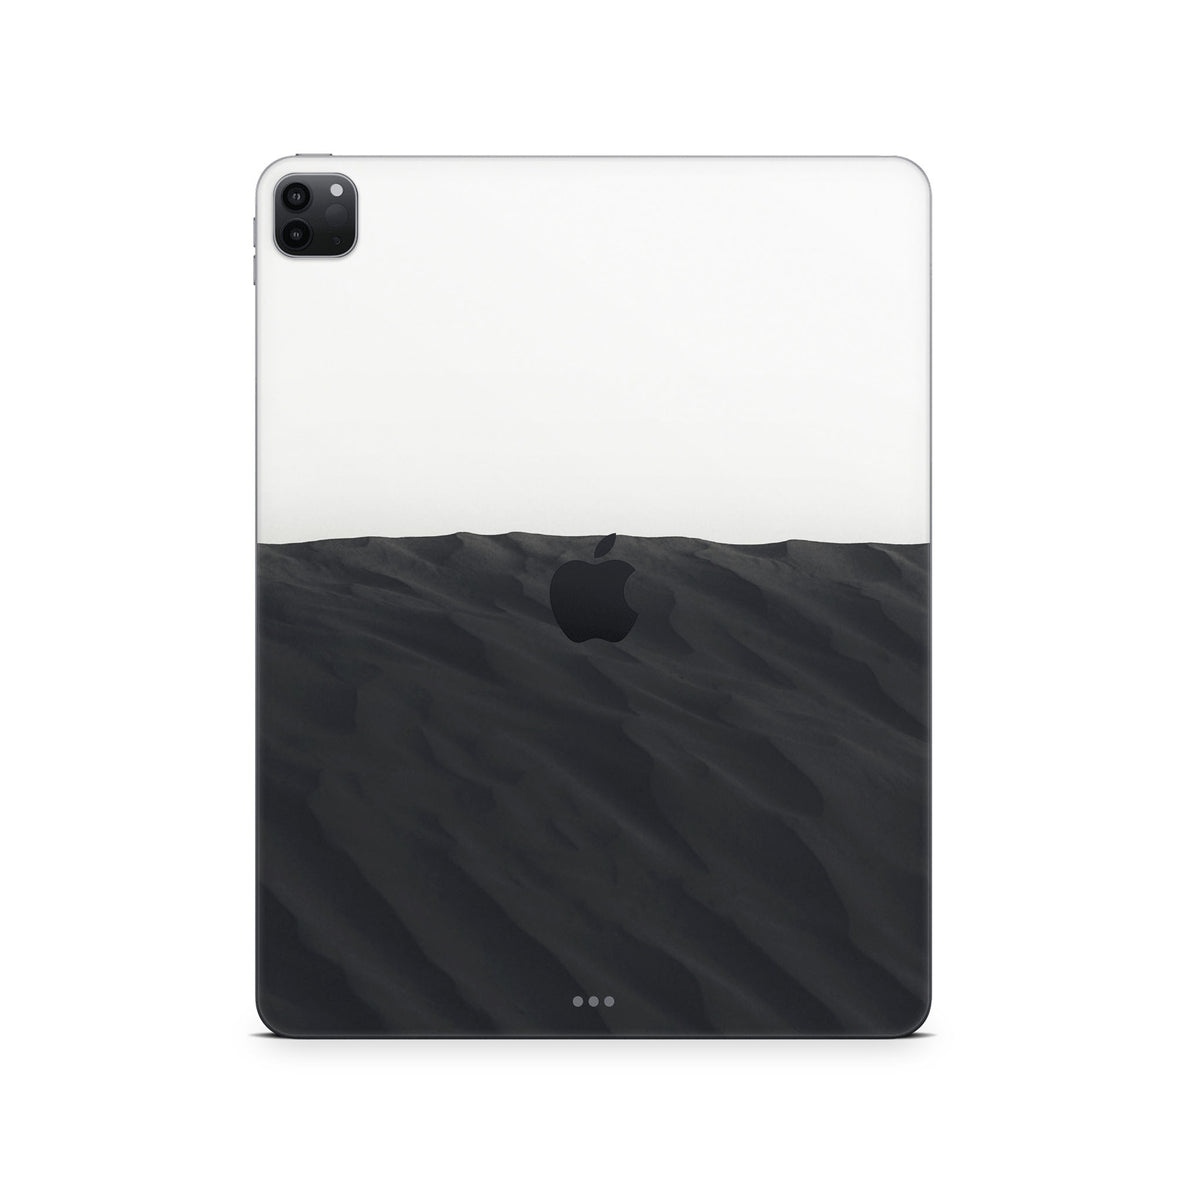 Dune (iPad Skin)